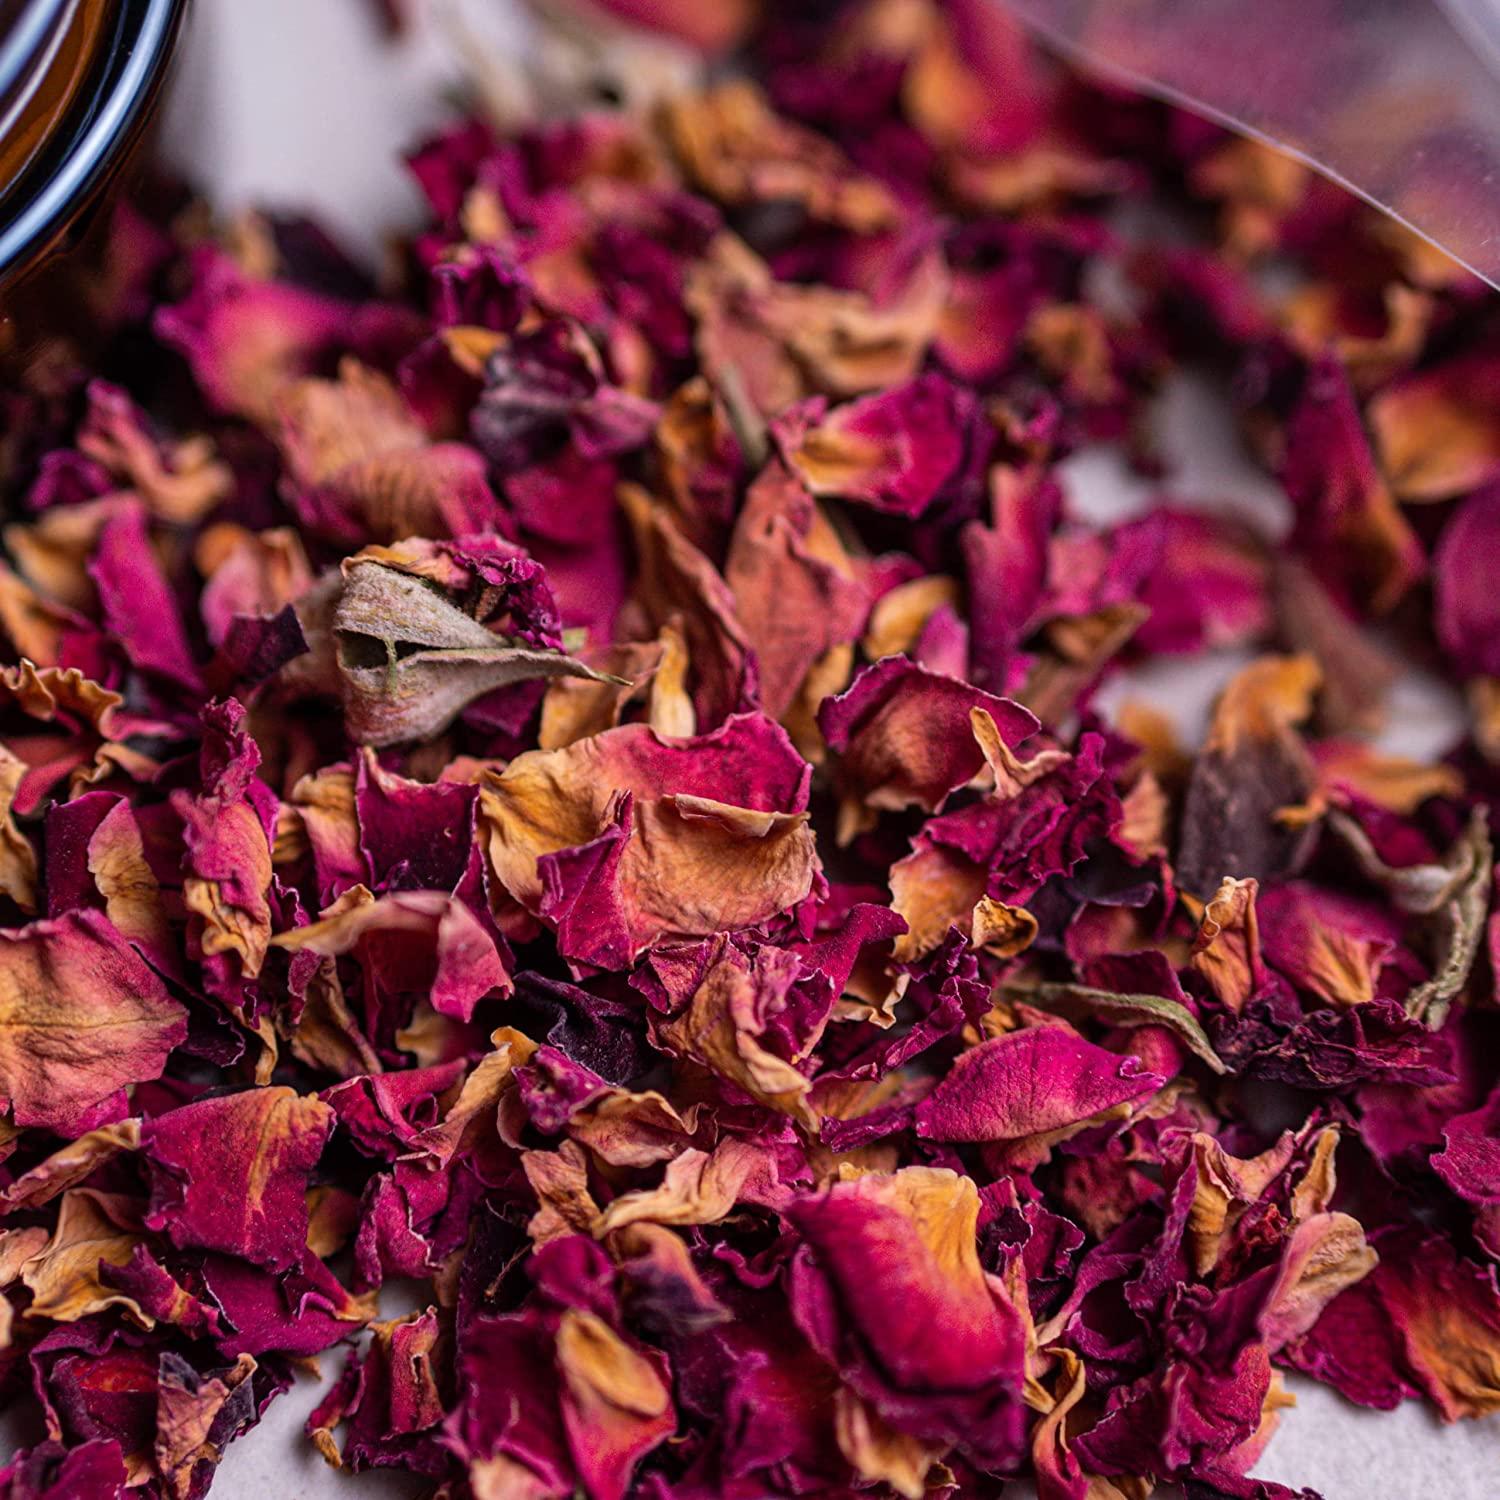 Red Rose Petals - Pure, All Natural & Edible Rose Petals - Dried